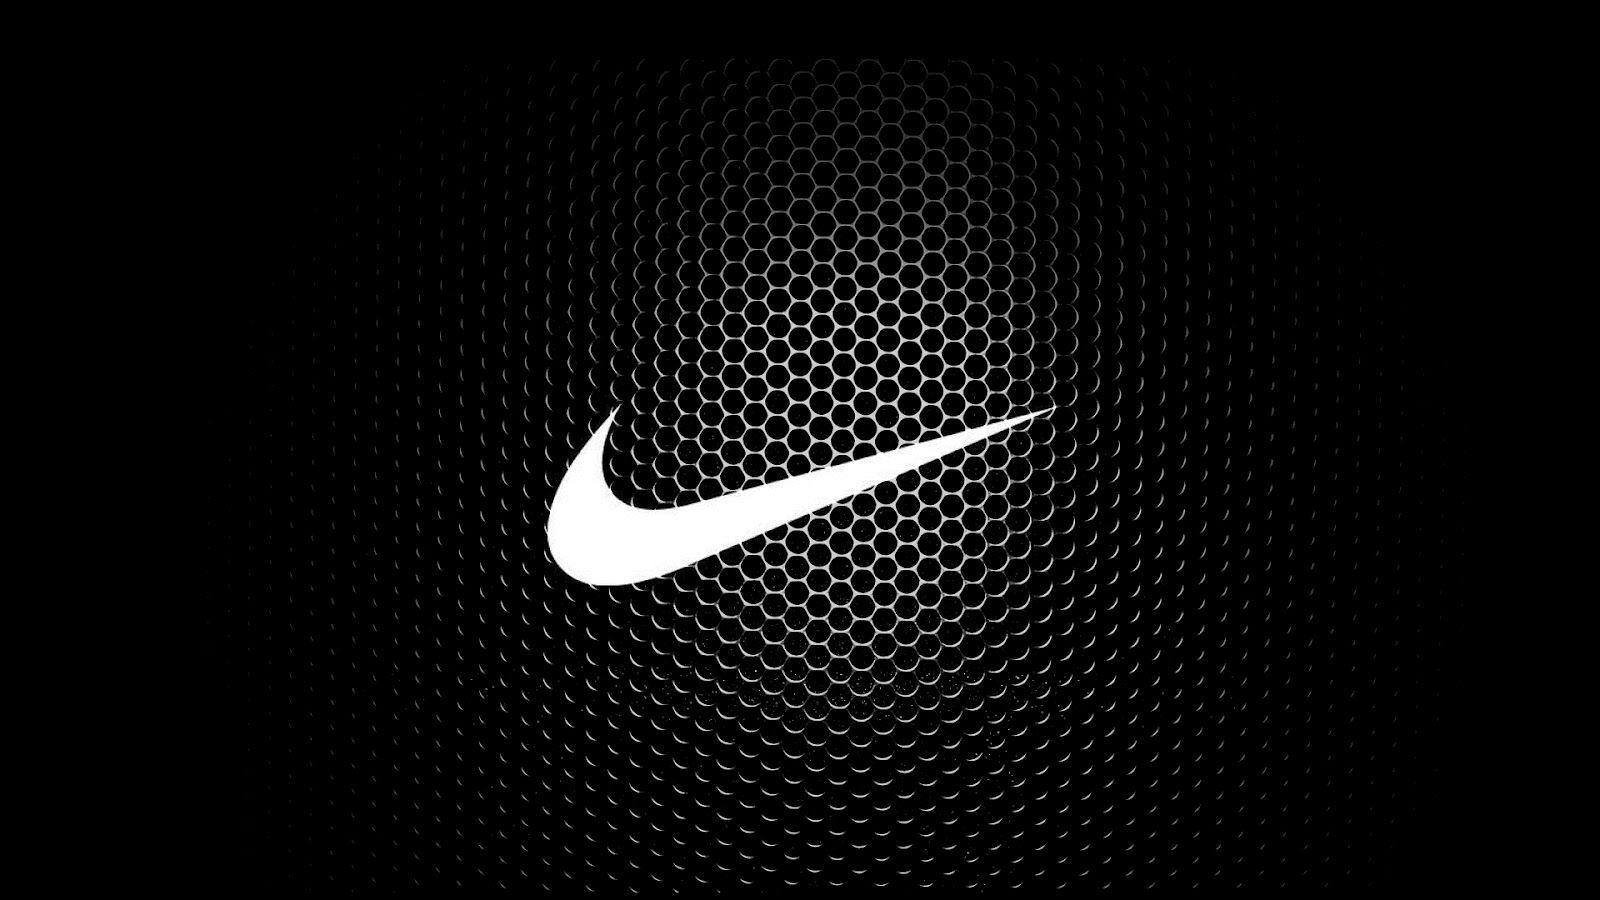 Cool Nike Logos 93 103088 Image HD Wallpaper. Wallfoy.com